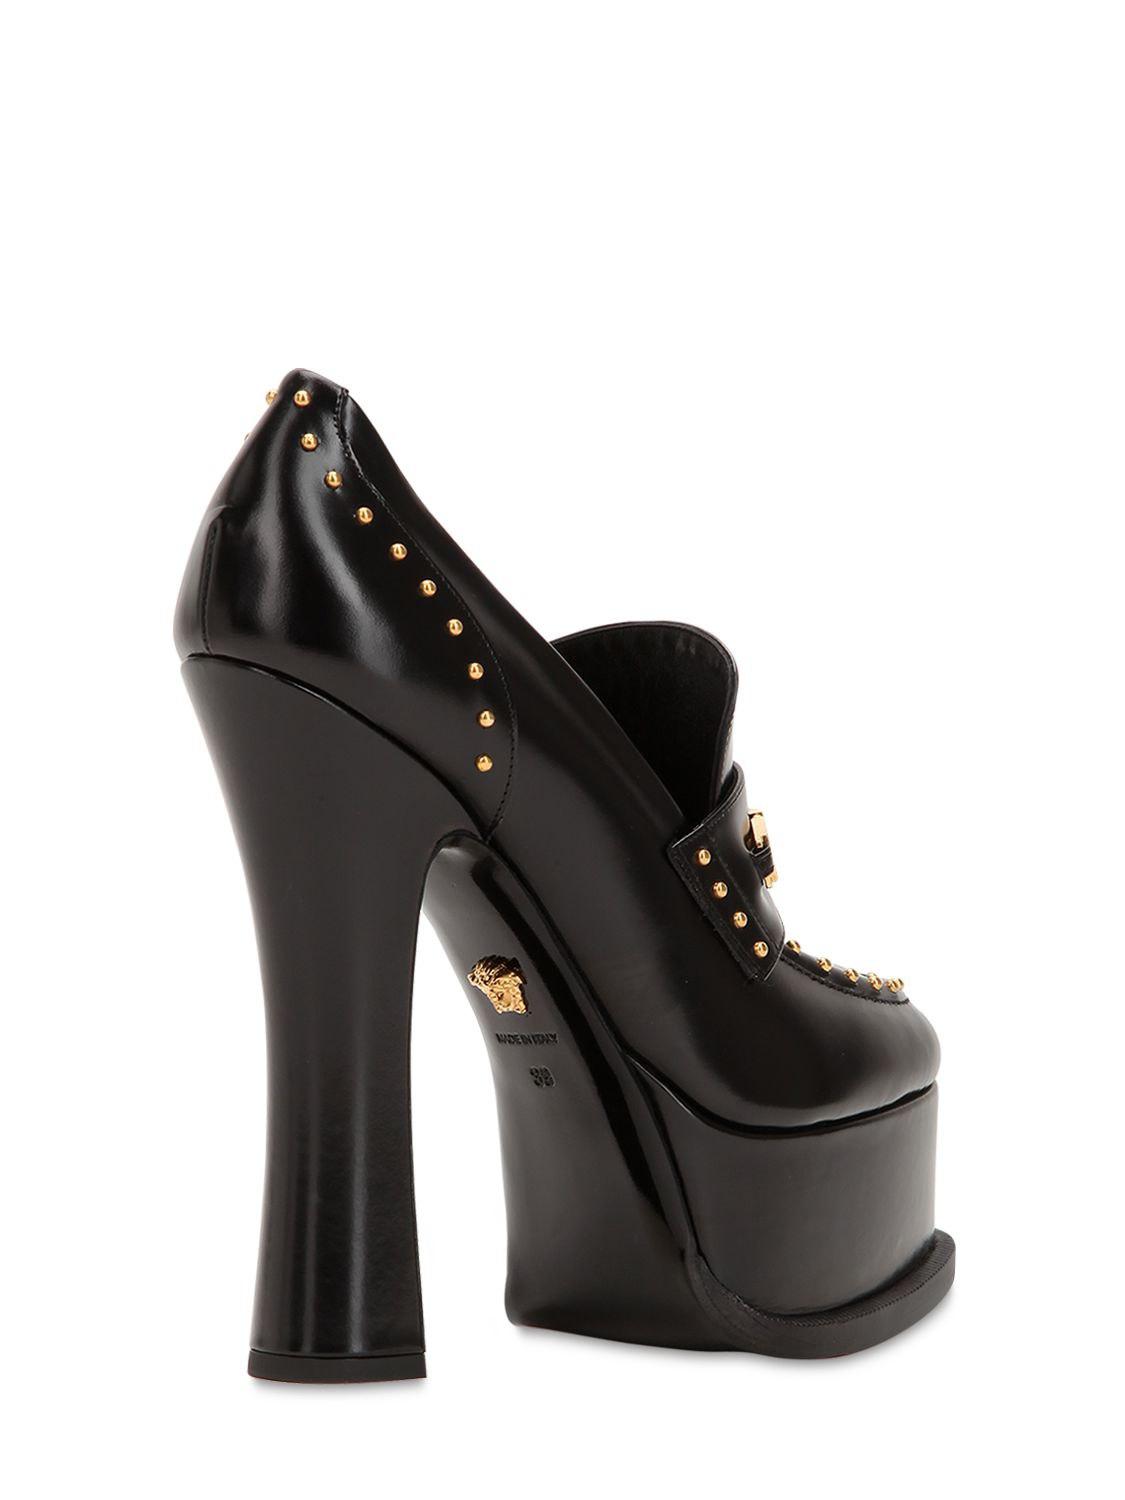 Versace Leather Icon Platform Loafer Heels in Black - Lyst